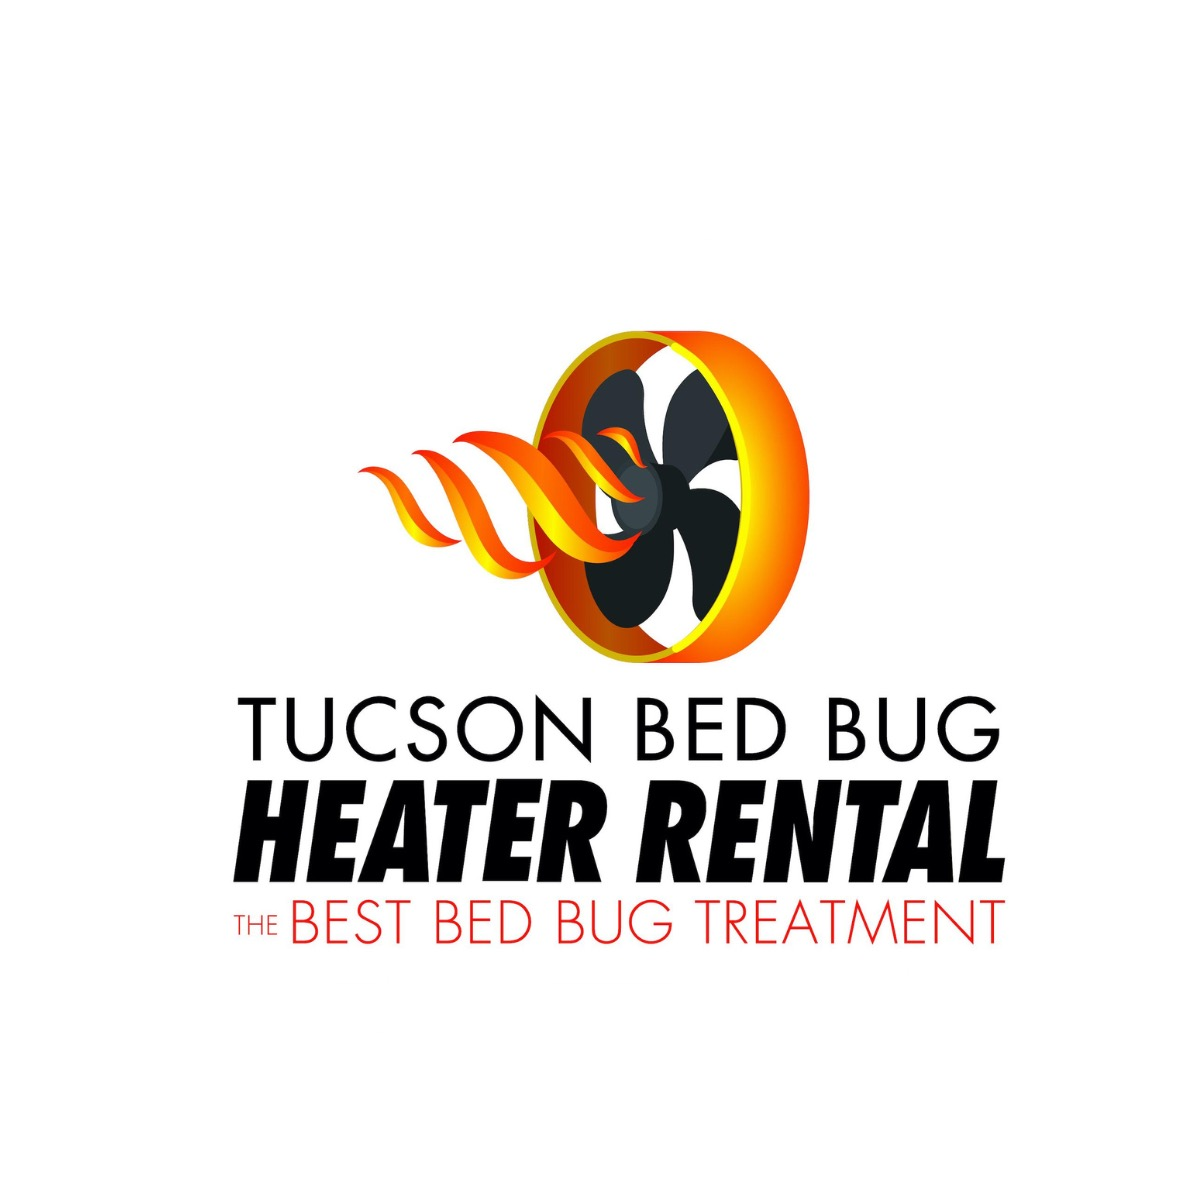 Tucson Bed Bug Heater Rental - Best Bed Bug Treatment - Tucson, AZ 85742 - (520)438-6333 | ShowMeLocal.com